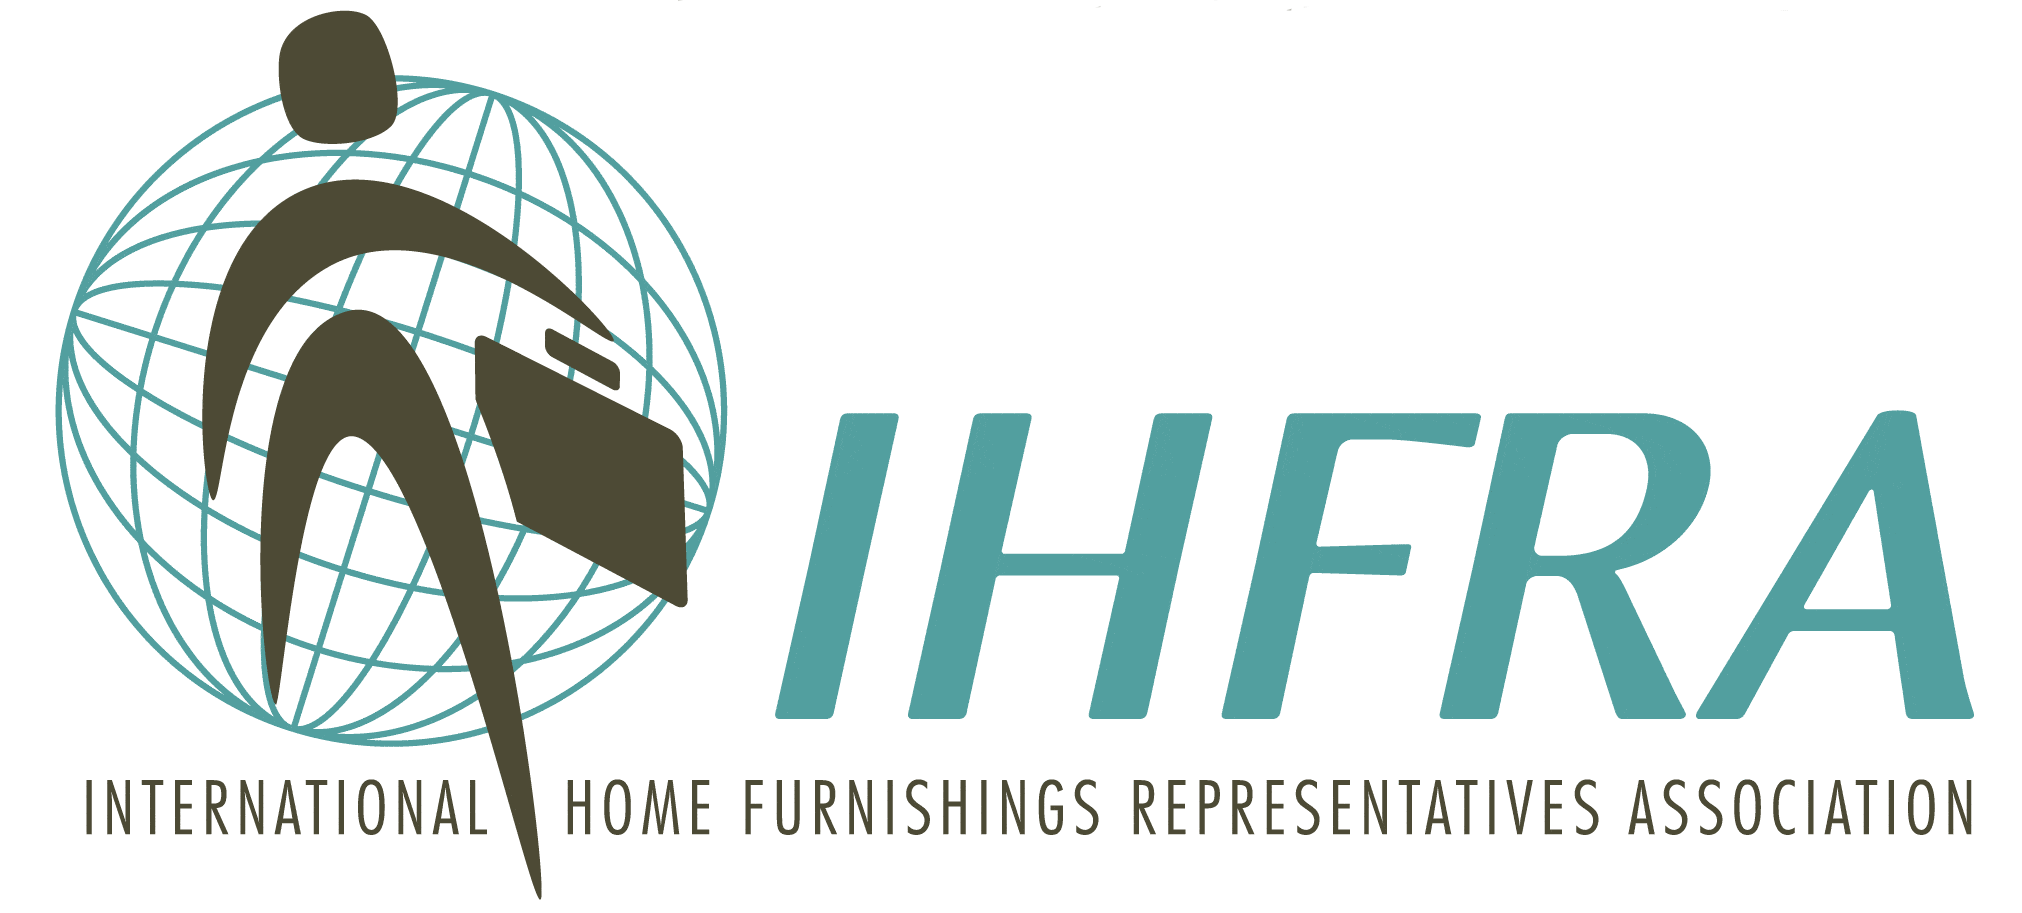 IHFRA - International Home Furnishings Representatives Association